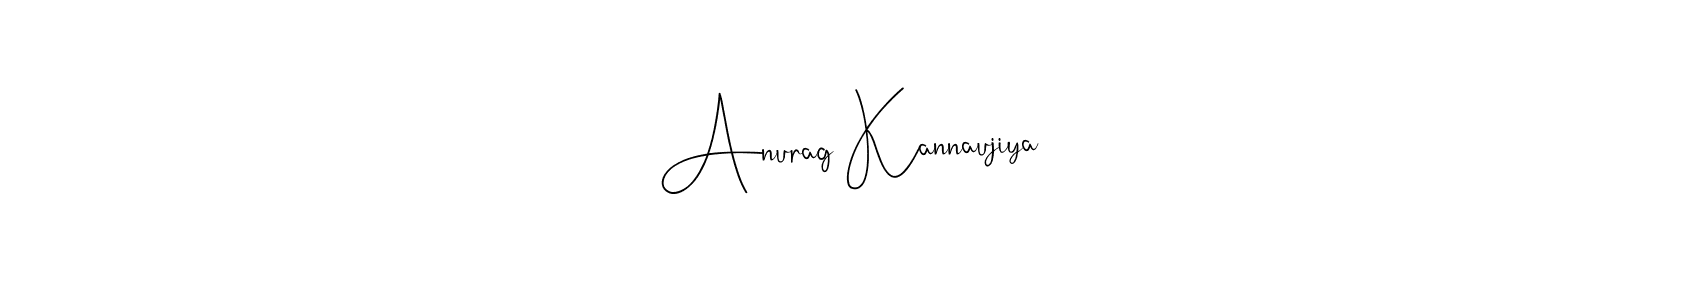 Make a beautiful signature design for name Anurag Kannaujiya. Use this online signature maker to create a handwritten signature for free. Anurag Kannaujiya signature style 4 images and pictures png